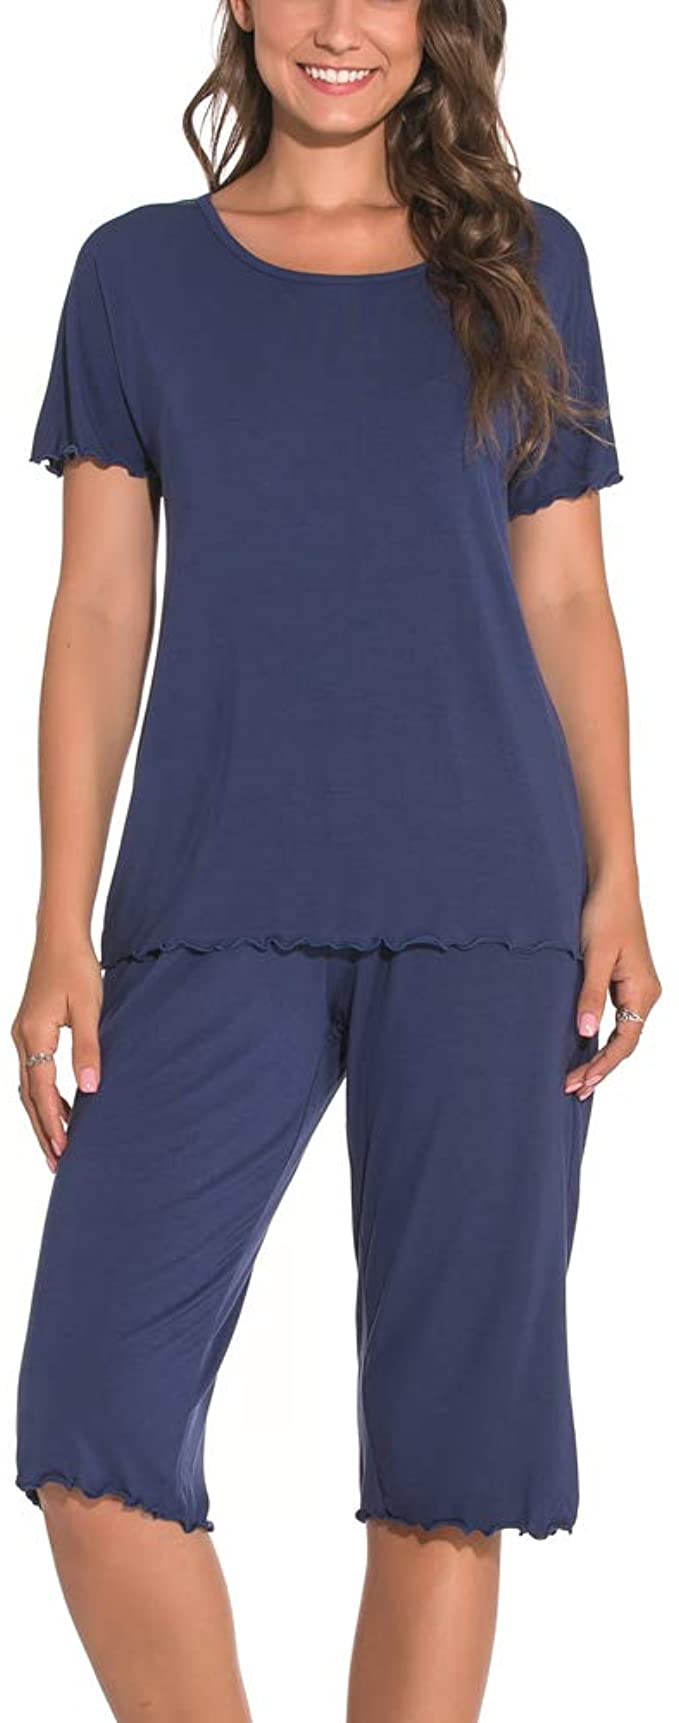 Tiddylove Women Pajama Sets Short Sleeve Bamboo Sleepwear Capri Pants with Pockets Pjs for Women S-2XL